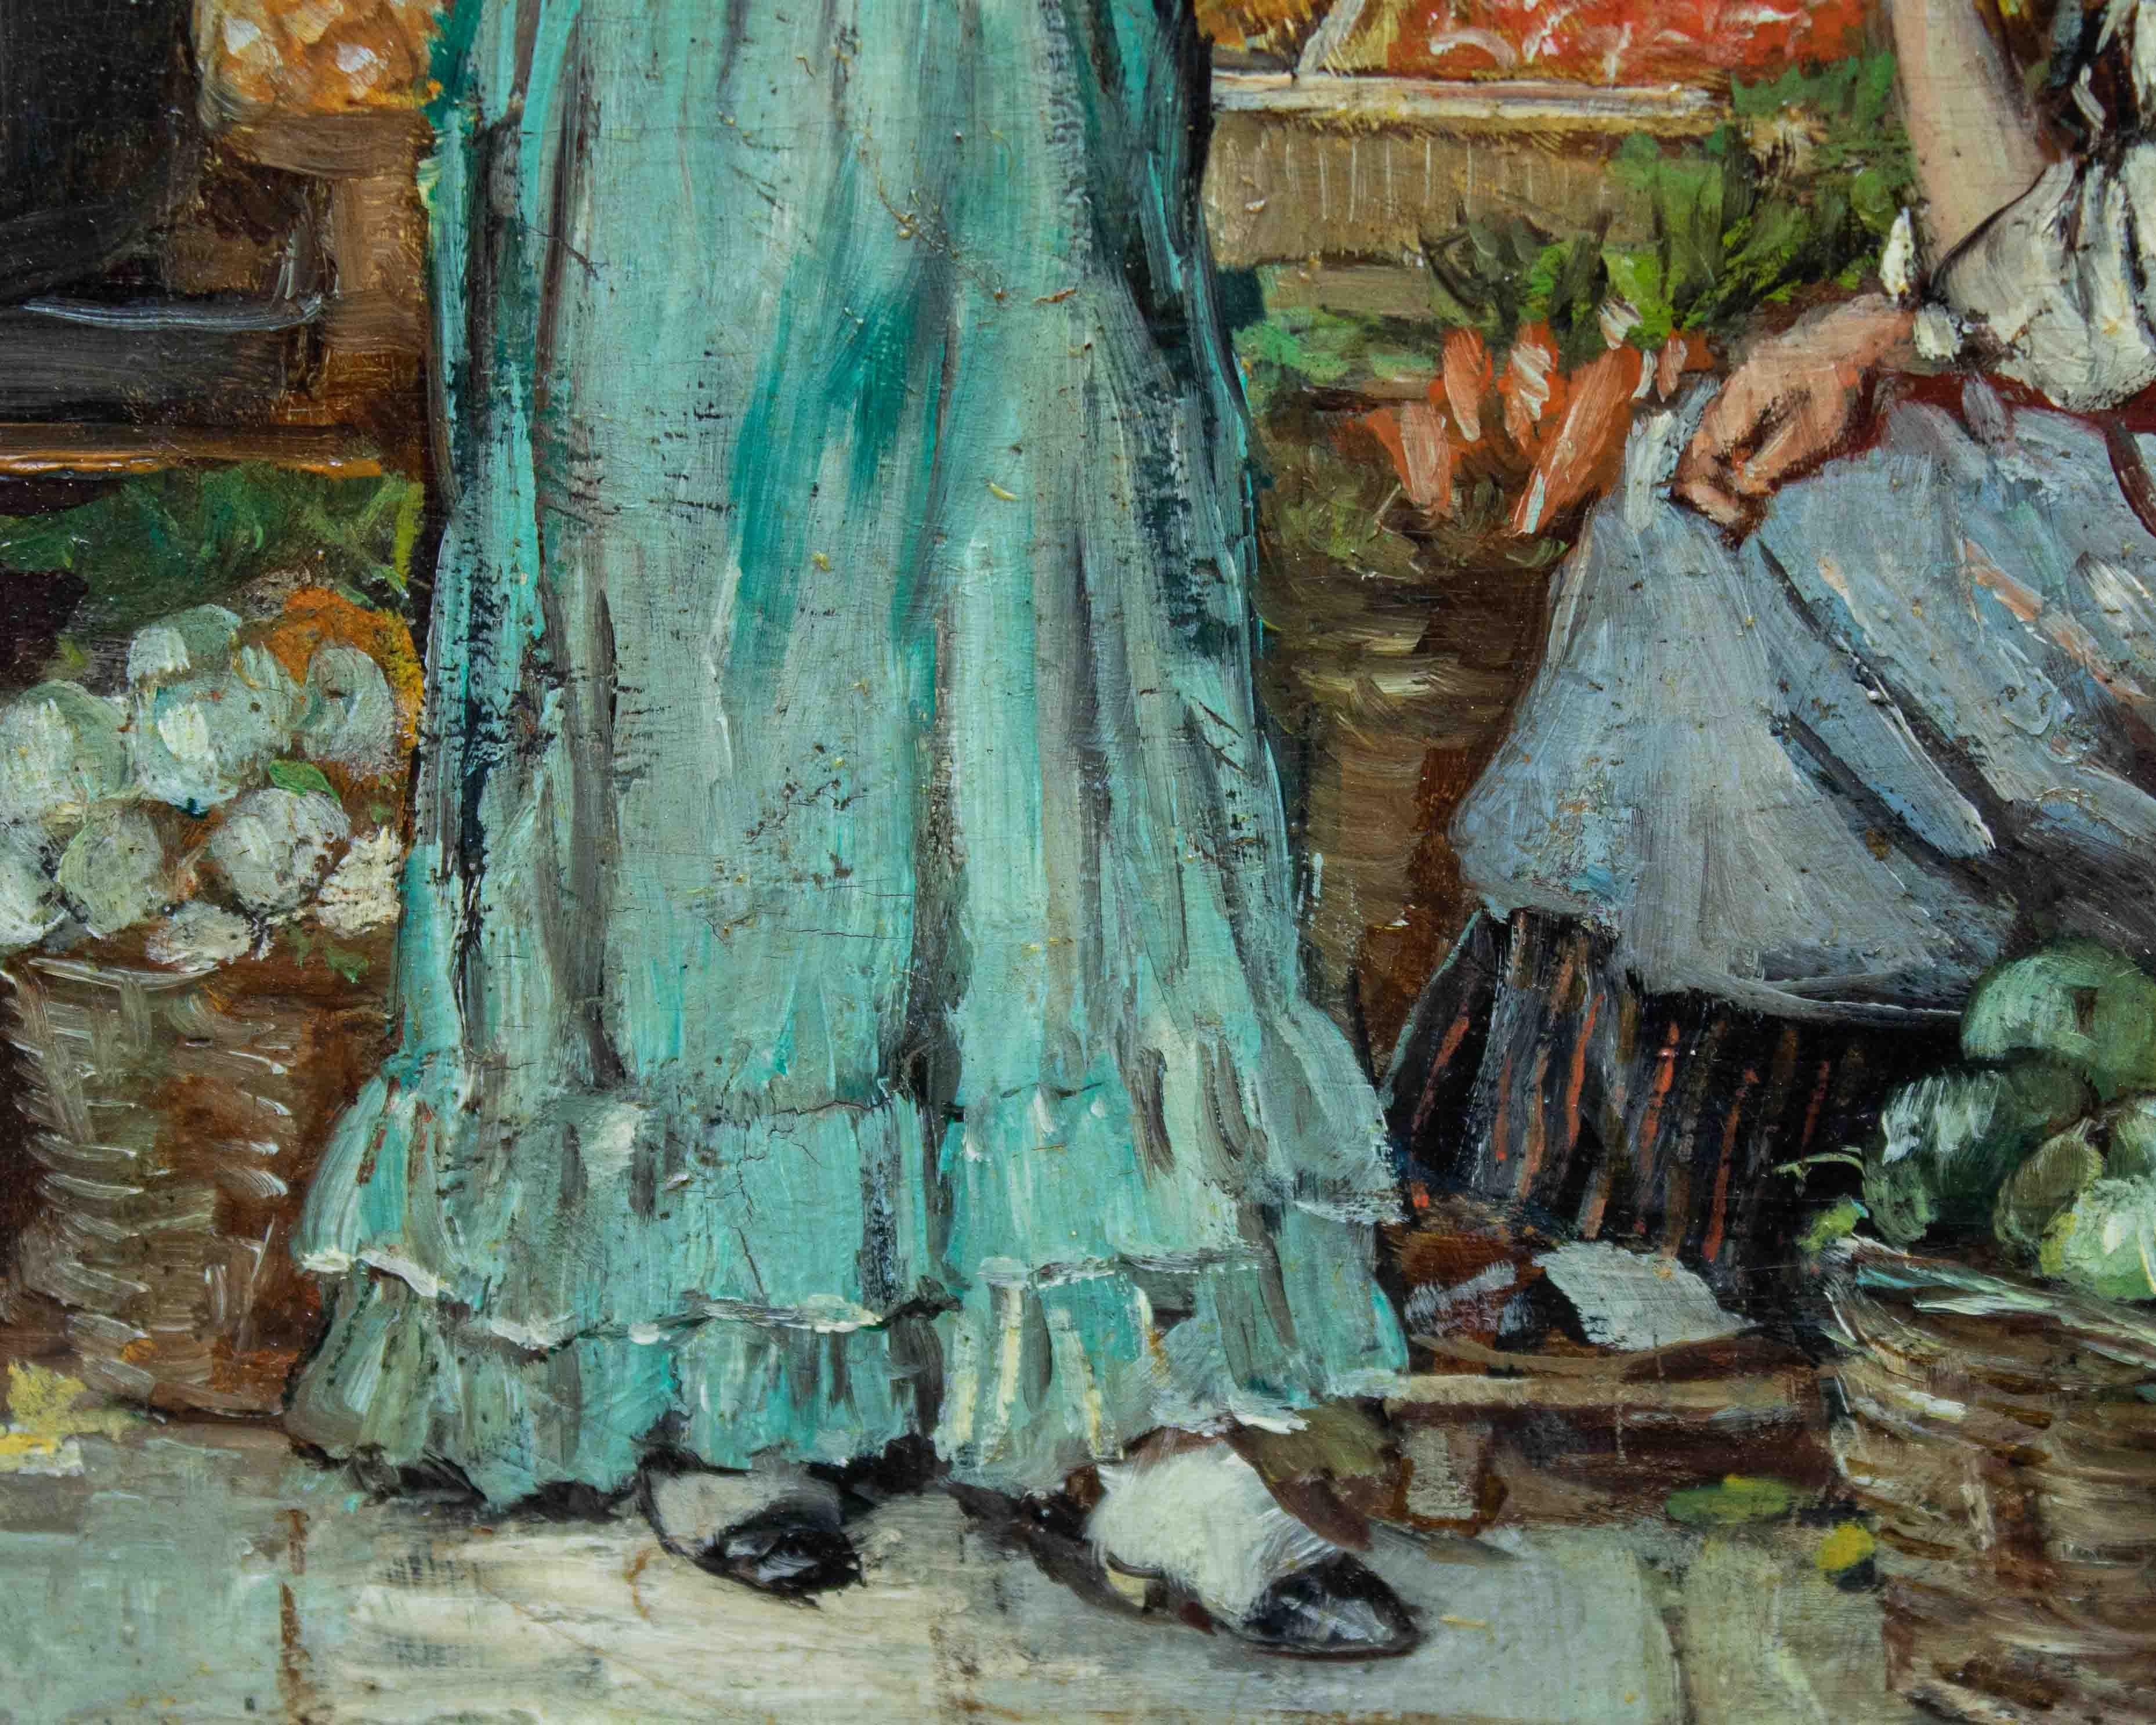 19th Century Market Scene Painting William Henry Pike Oil on Panel 11